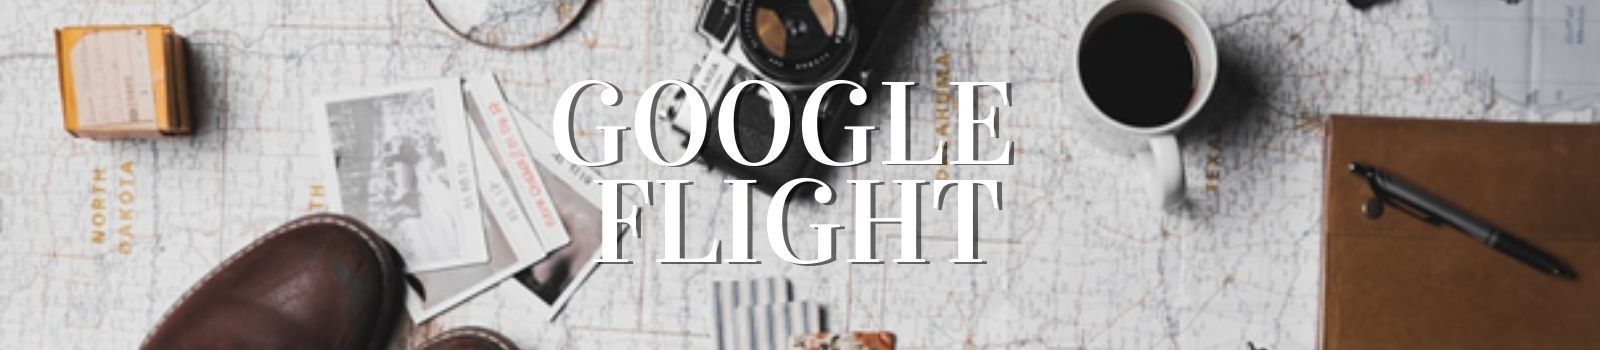 google flights info tips to book a